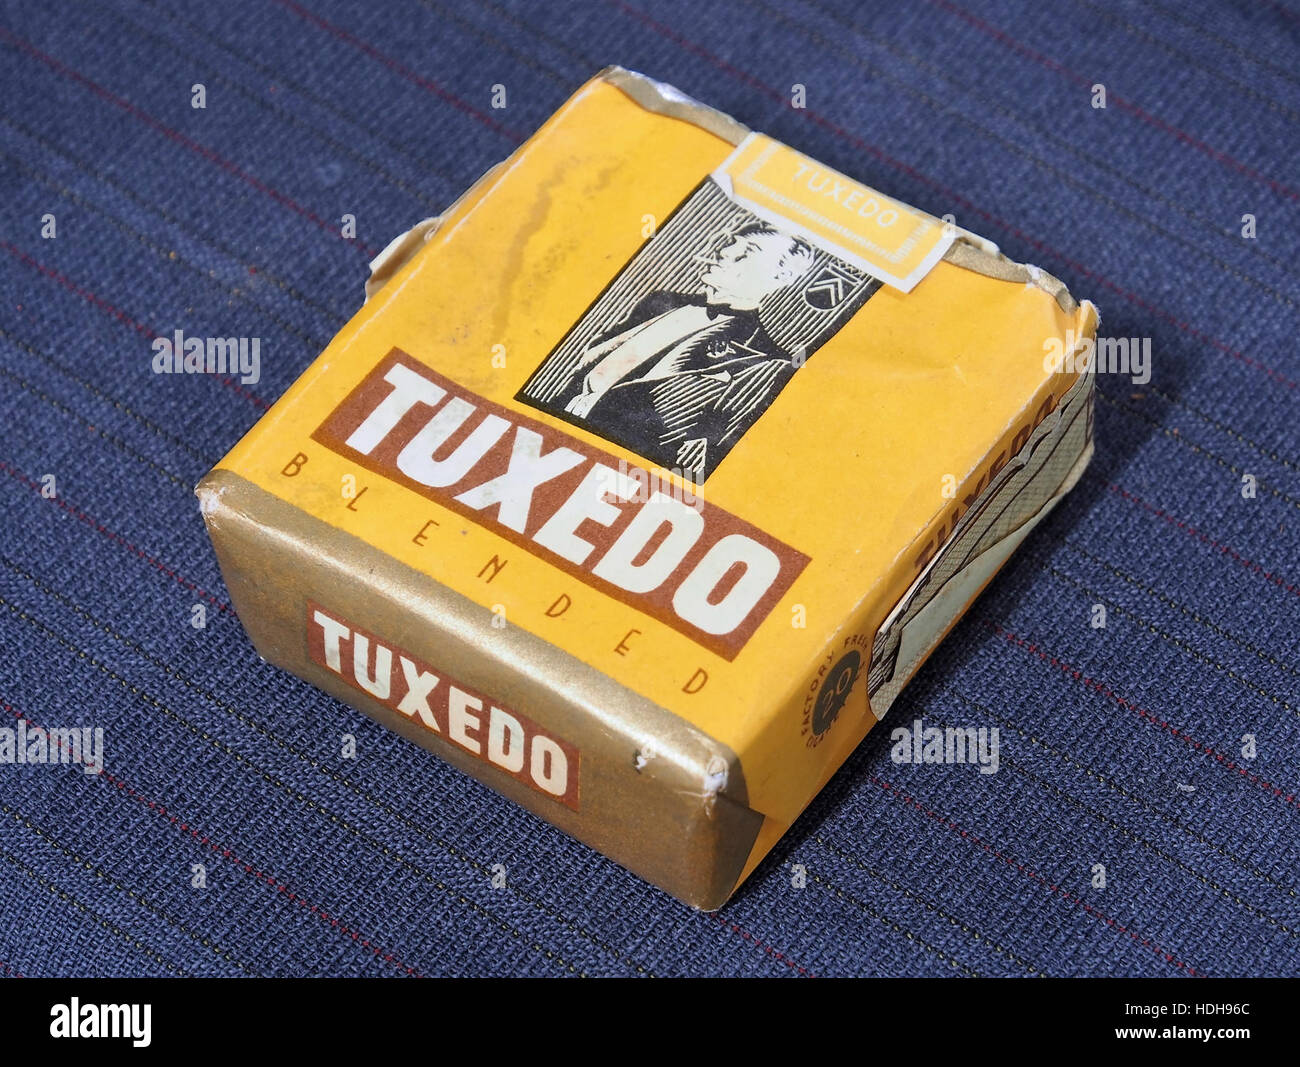 Tuxedo cigarettes pack pic1 Stock Photo